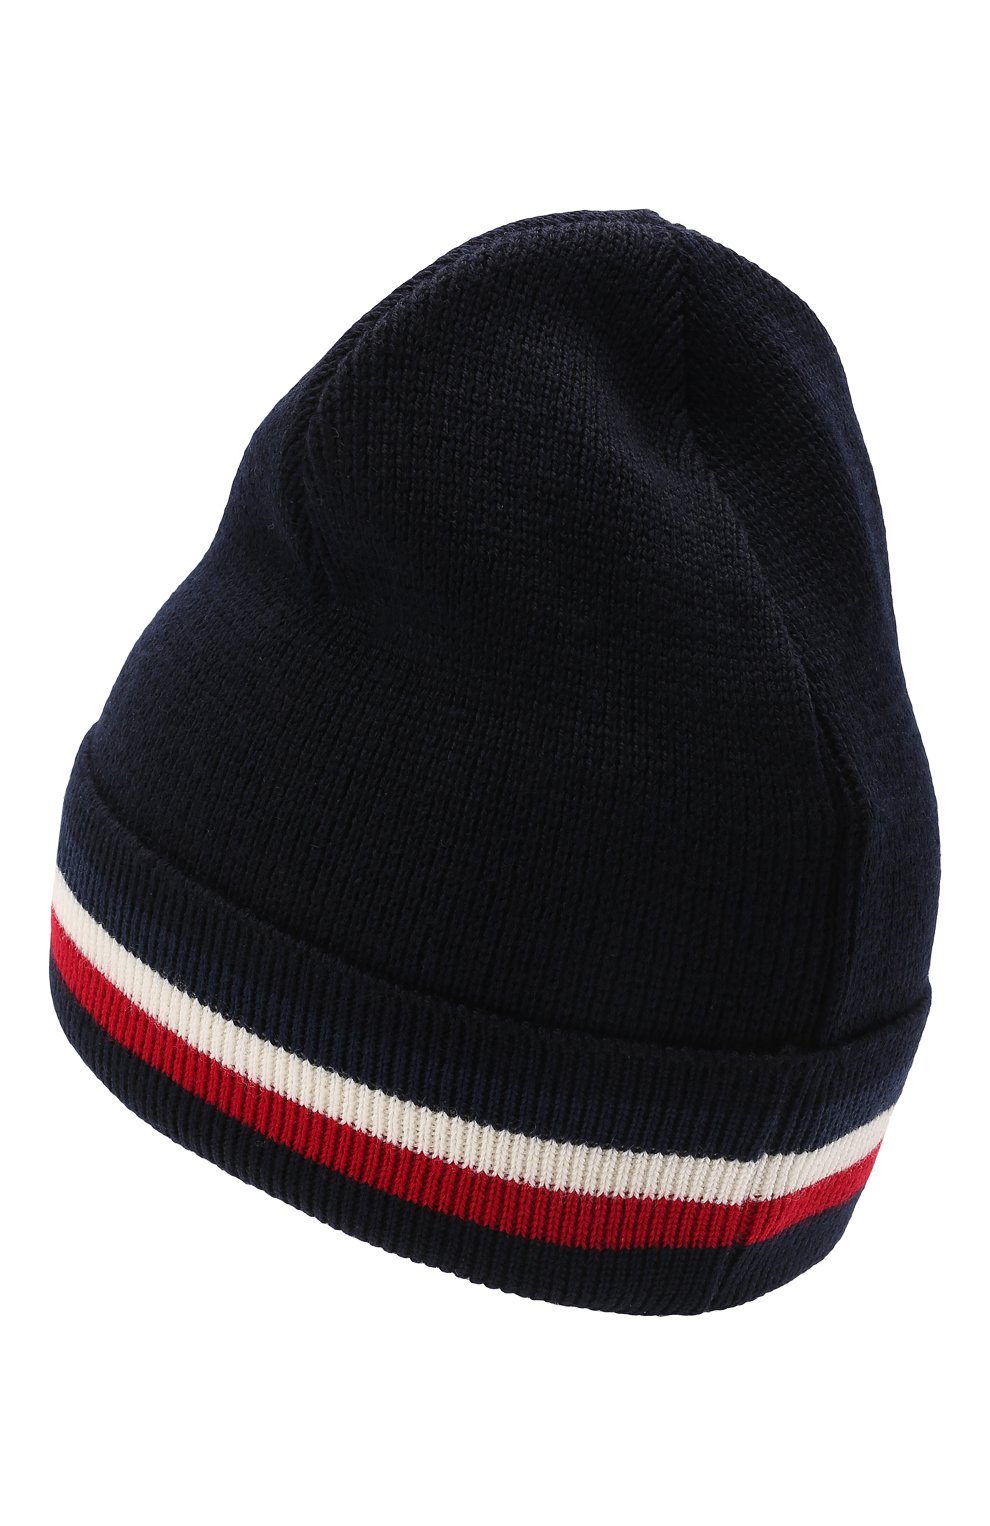 Мужская шерстяная шапка MONCLER темно-синего цвета, арт. G2-091-3B000-28-A9575 | Фото 2 (Материал: Текстиль, Ше рсть; Кросс-КТ: Трикотаж)